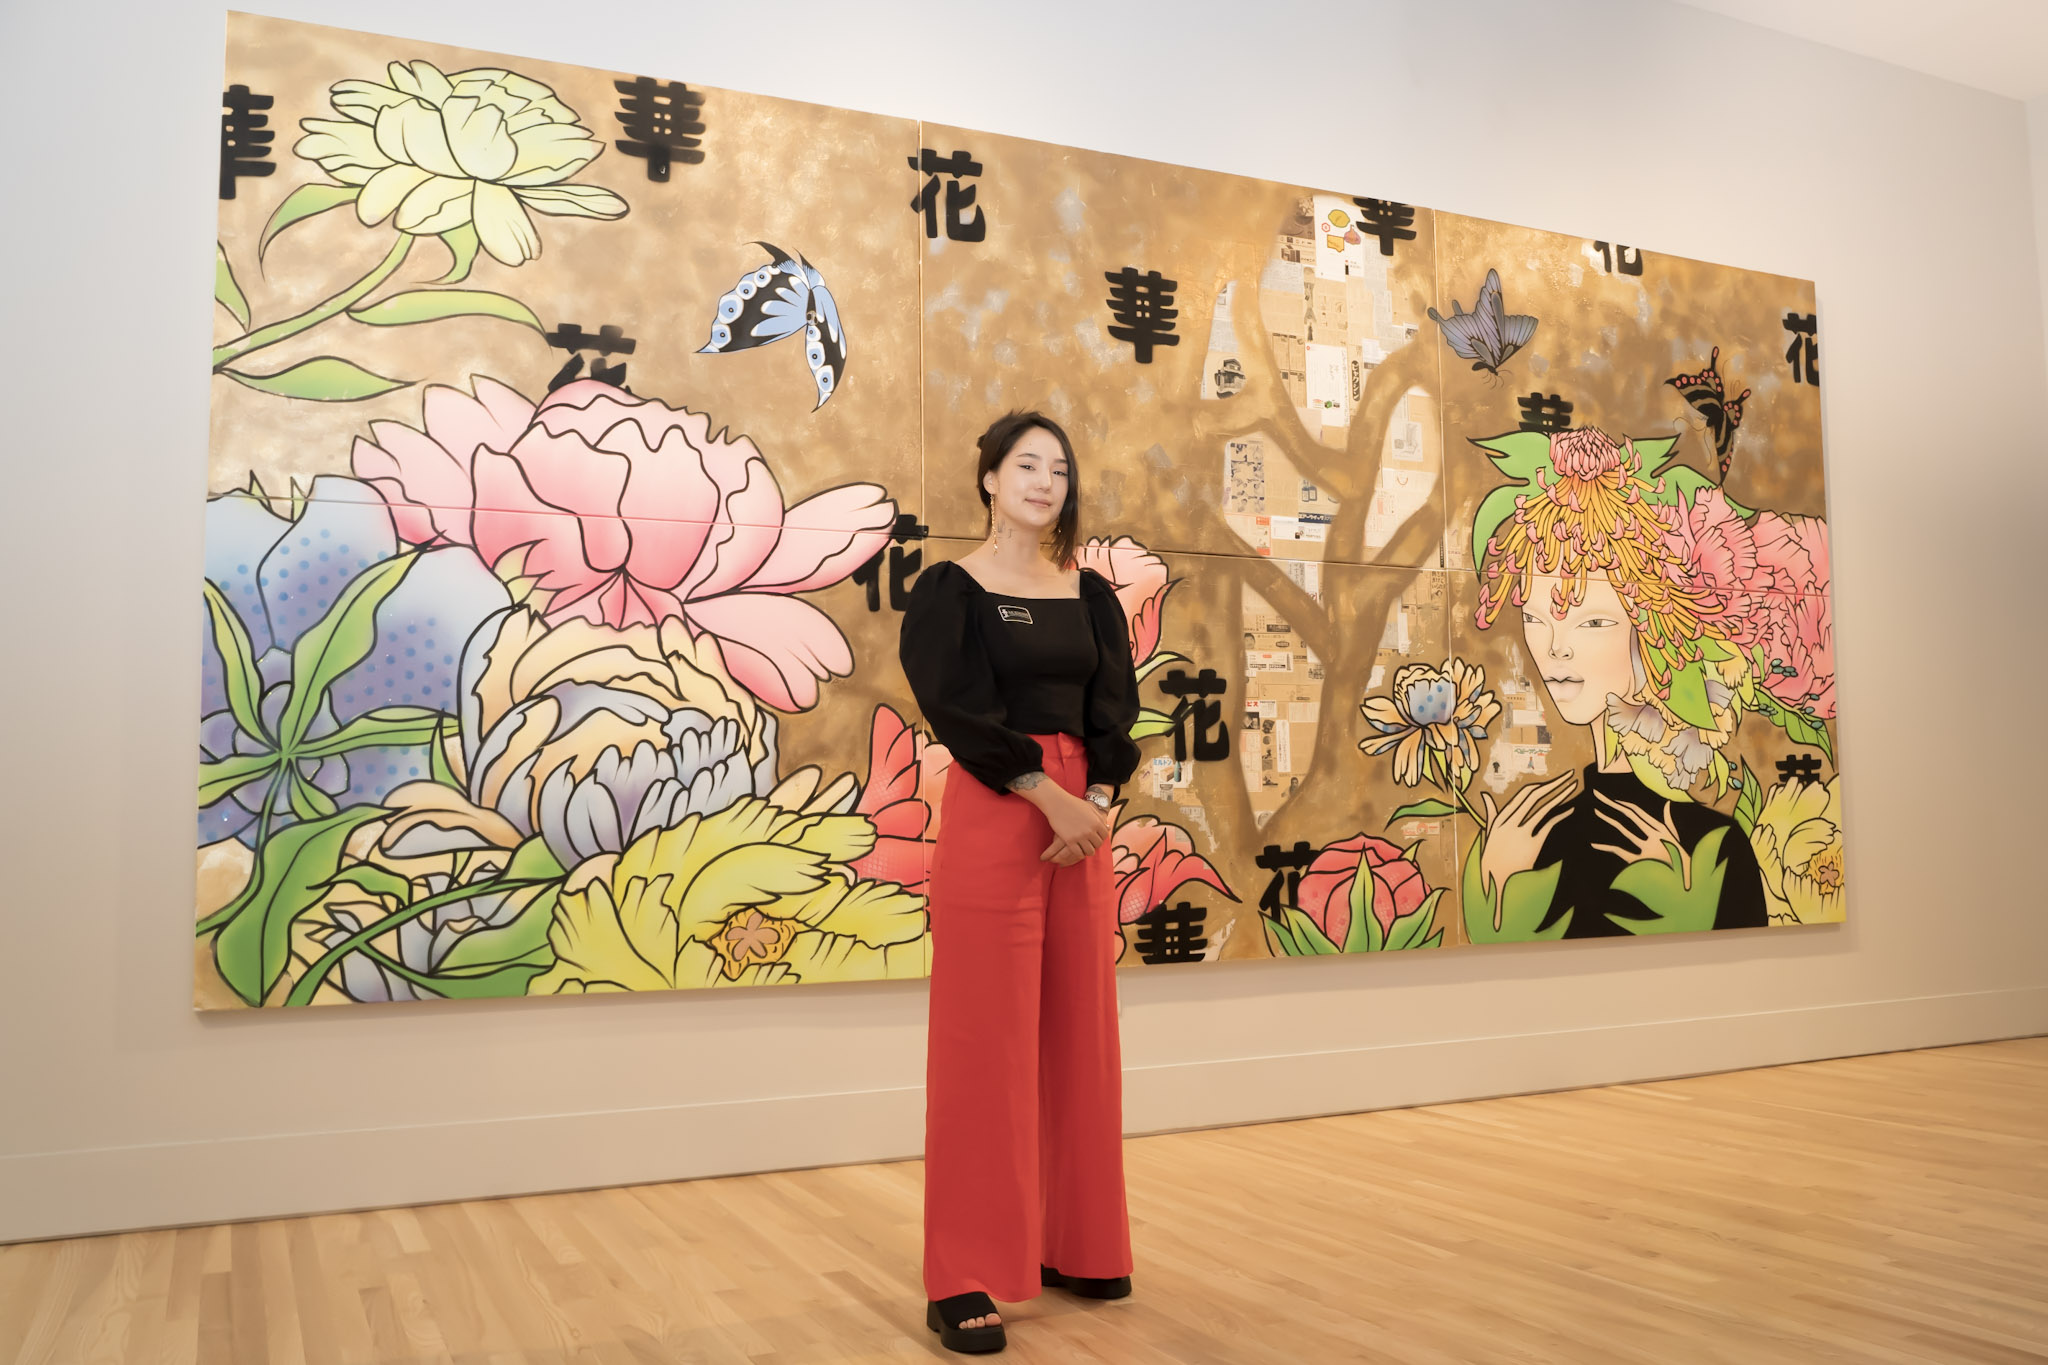 Elena Øhlander with her mural at Morikami Museum and Japanese Gardens